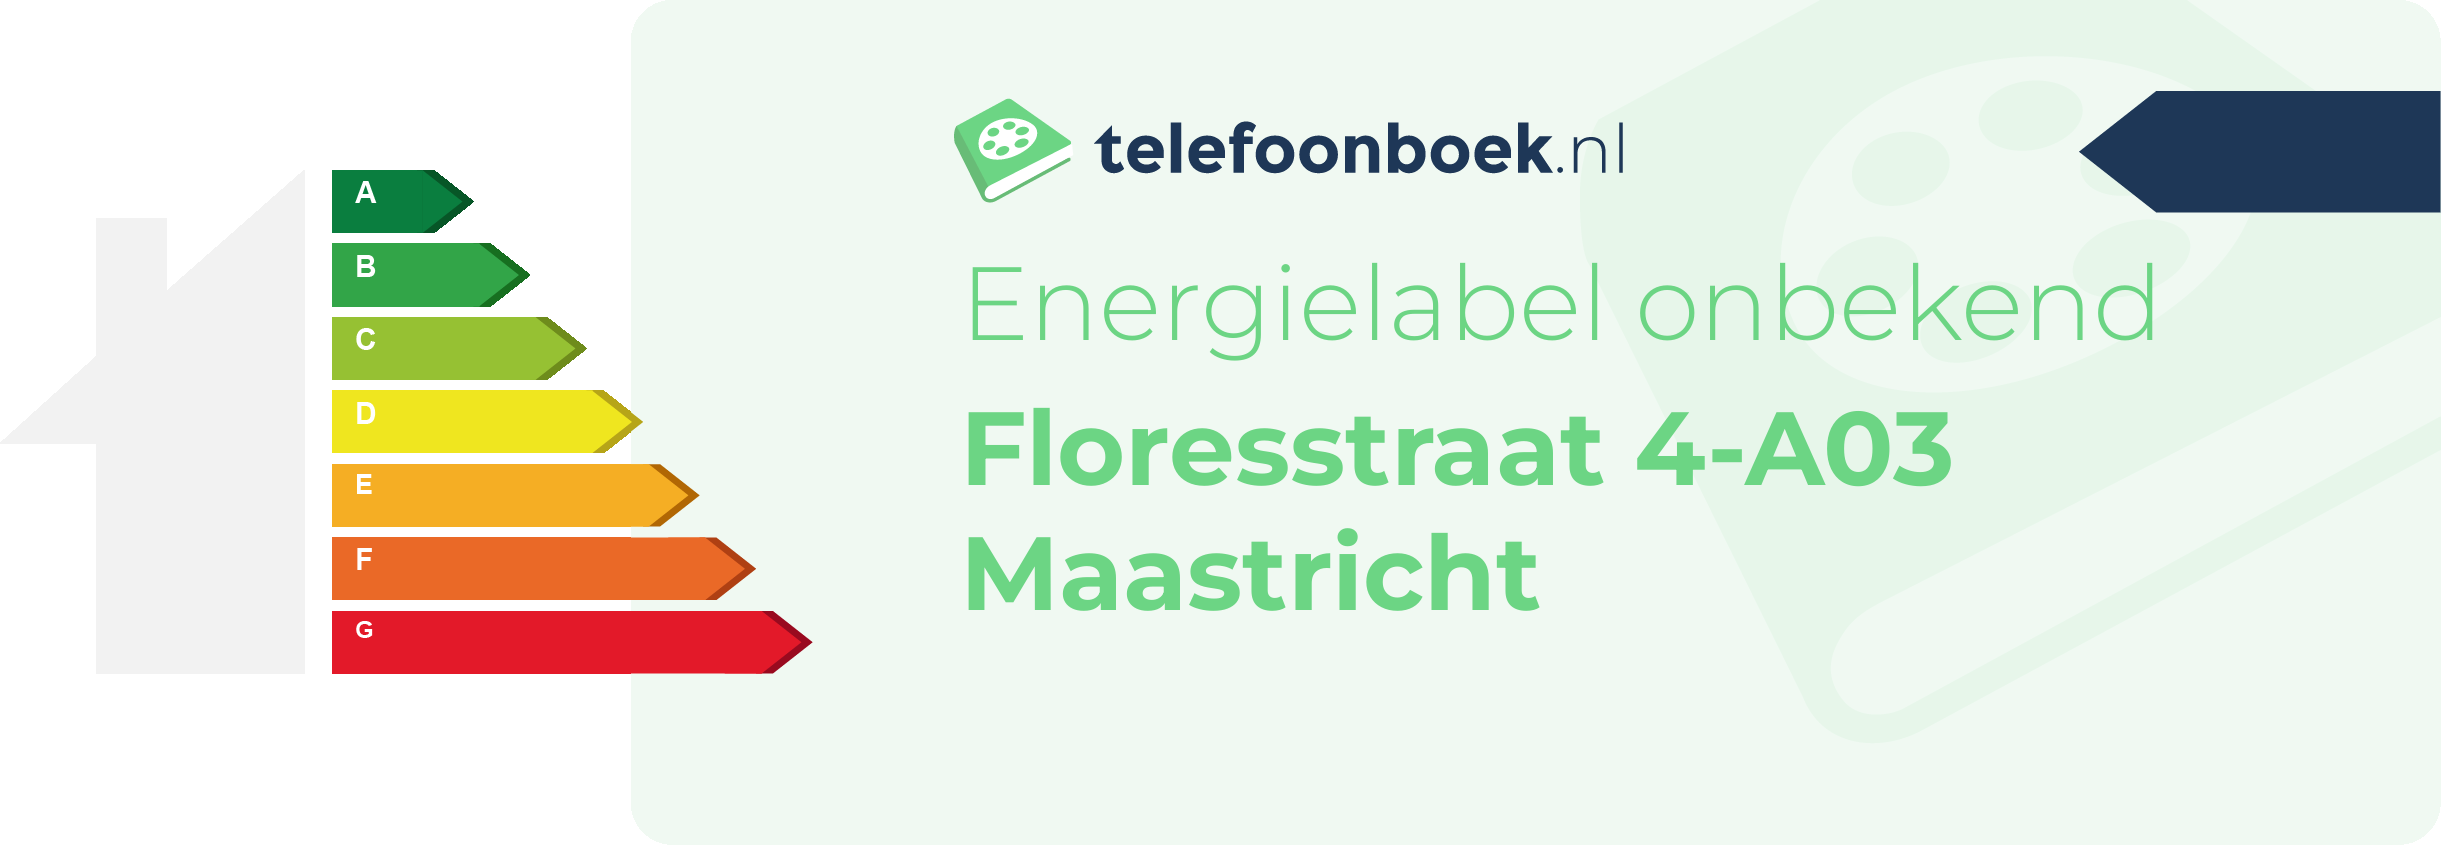 Energielabel Floresstraat 4-A03 Maastricht